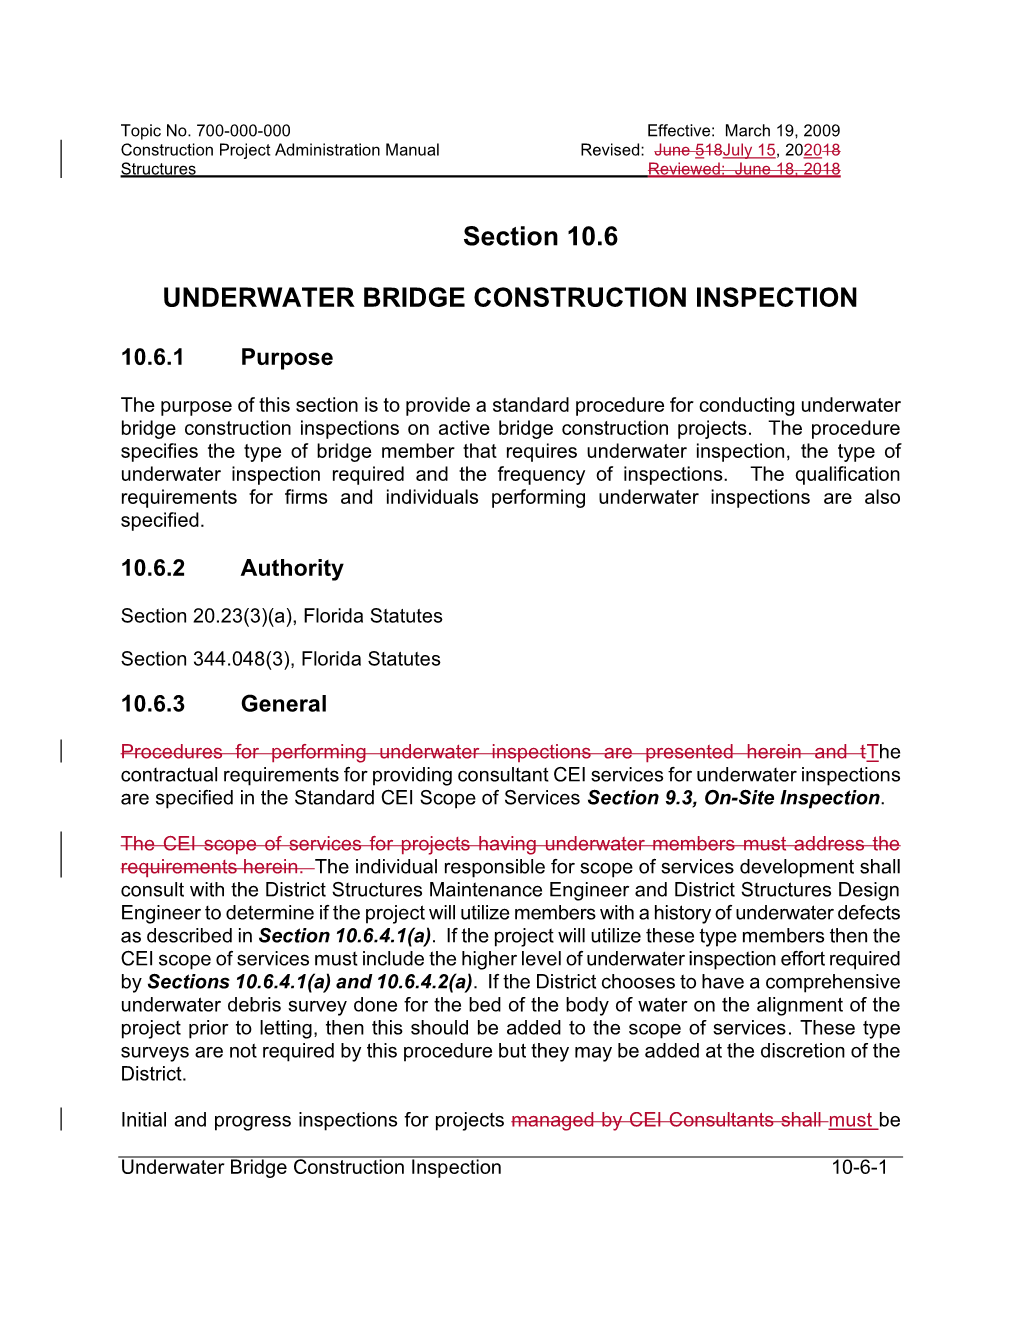 Section 10.6 UNDERWATER BRIDGE CONSTRUCTION